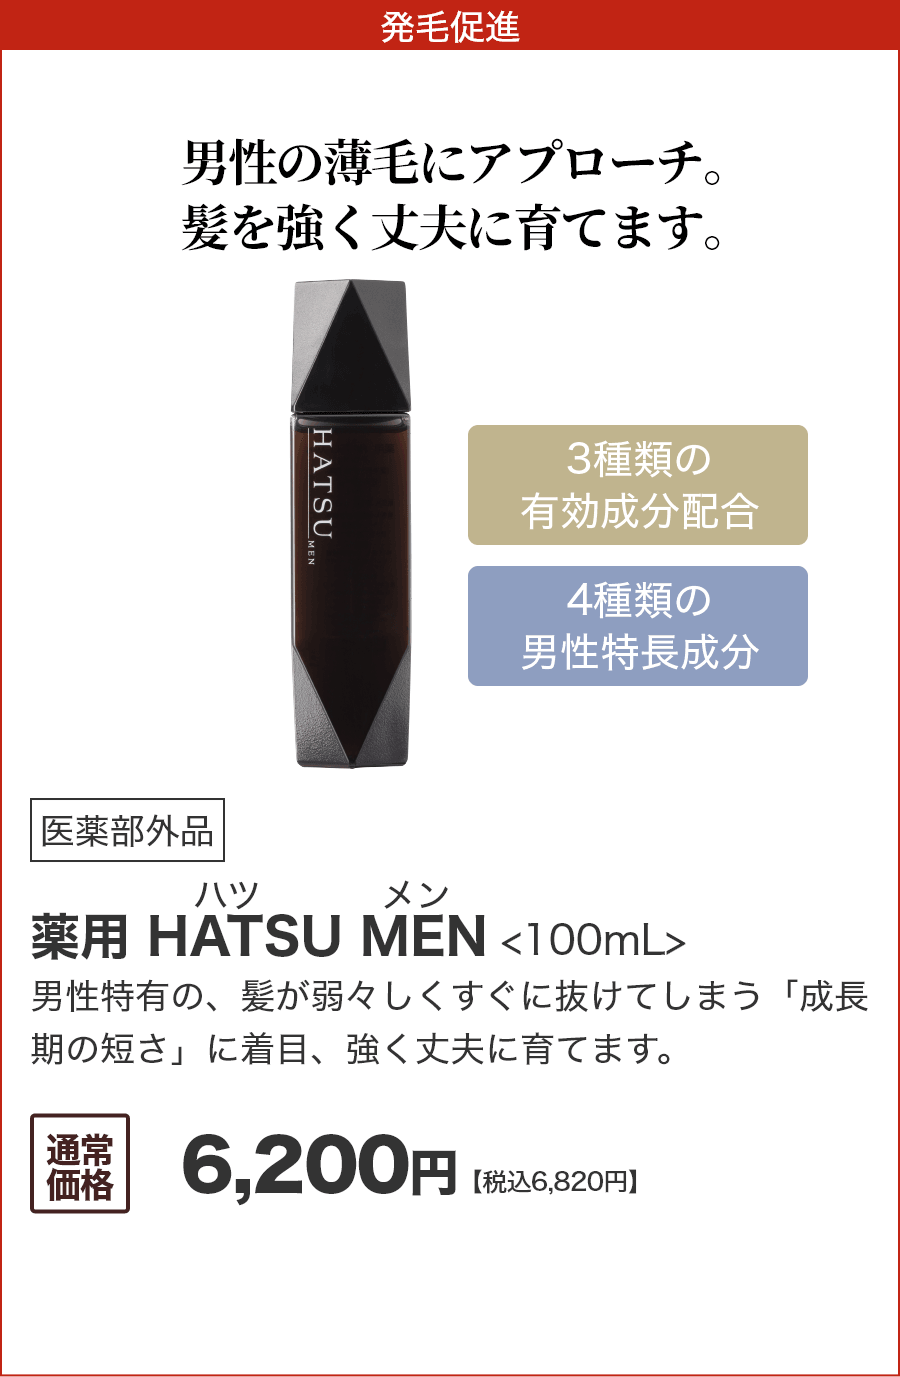 薬用 HATSU MEN<100mL>